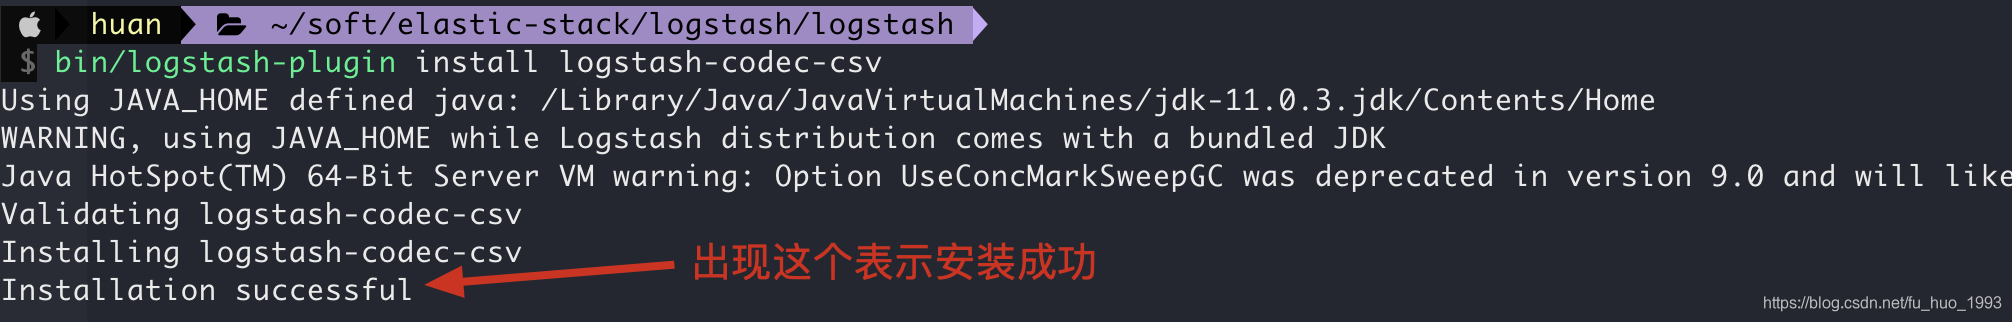 logstash 安装 csv codec 插件